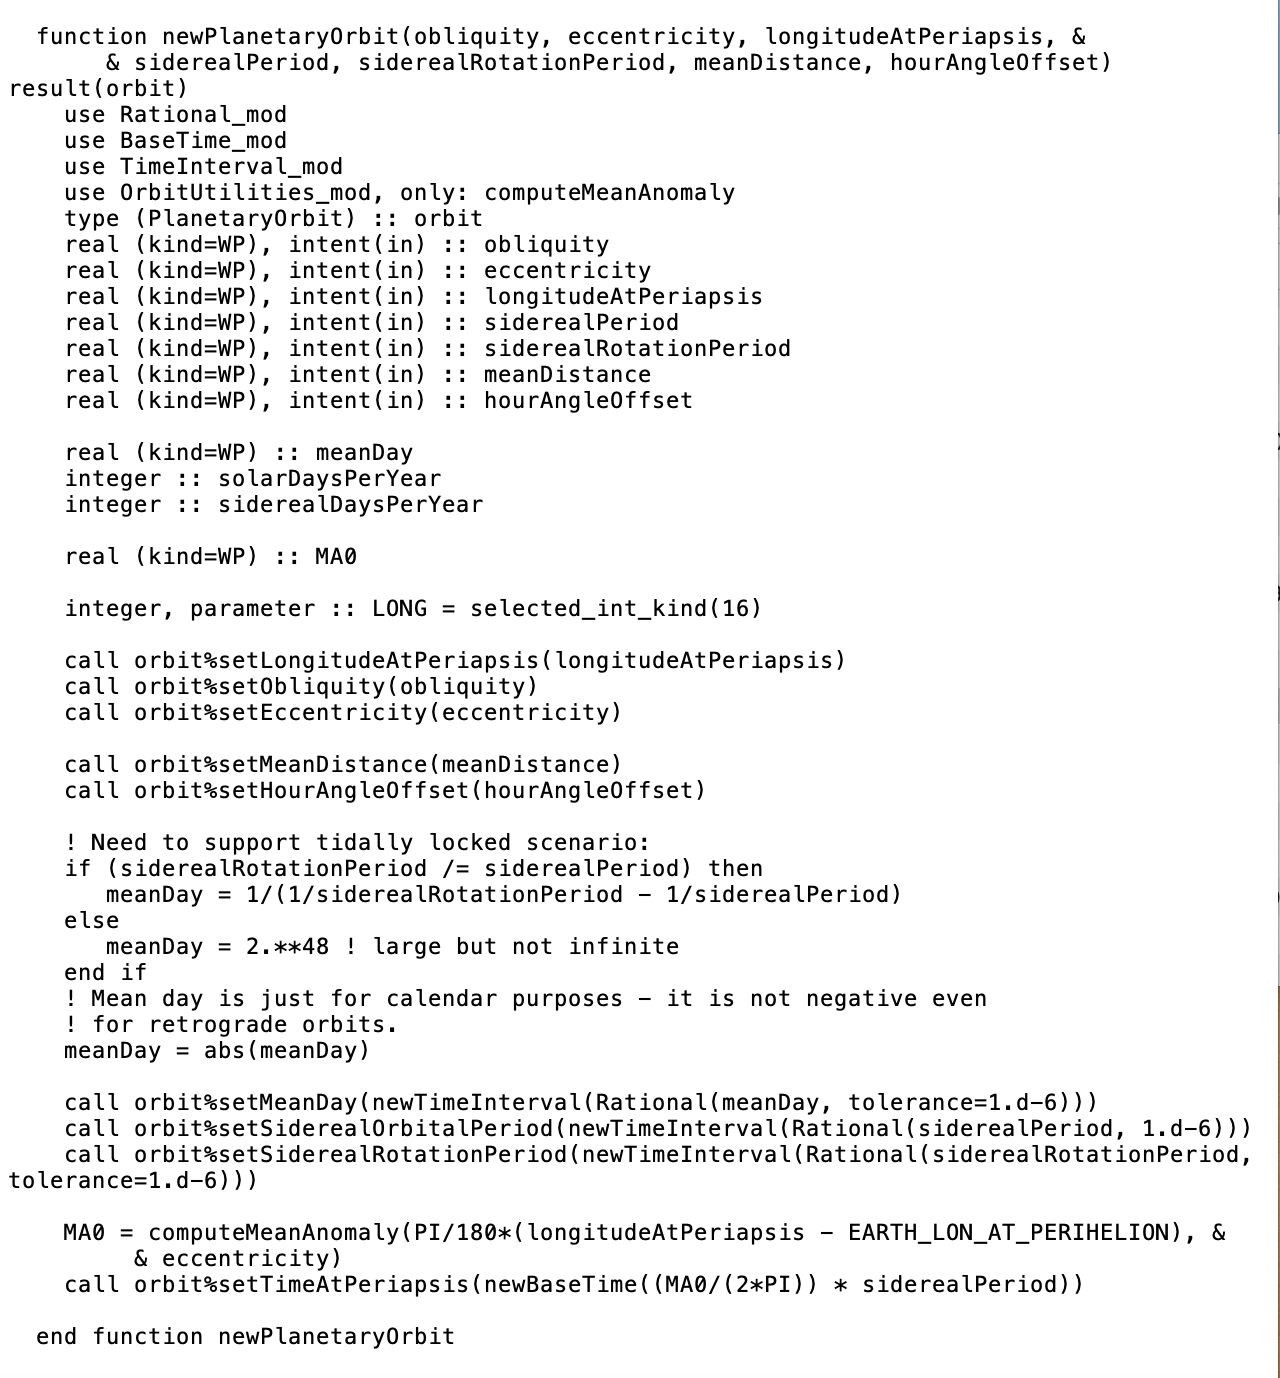 excerpt of Fortran code from the ROCKE-3D model